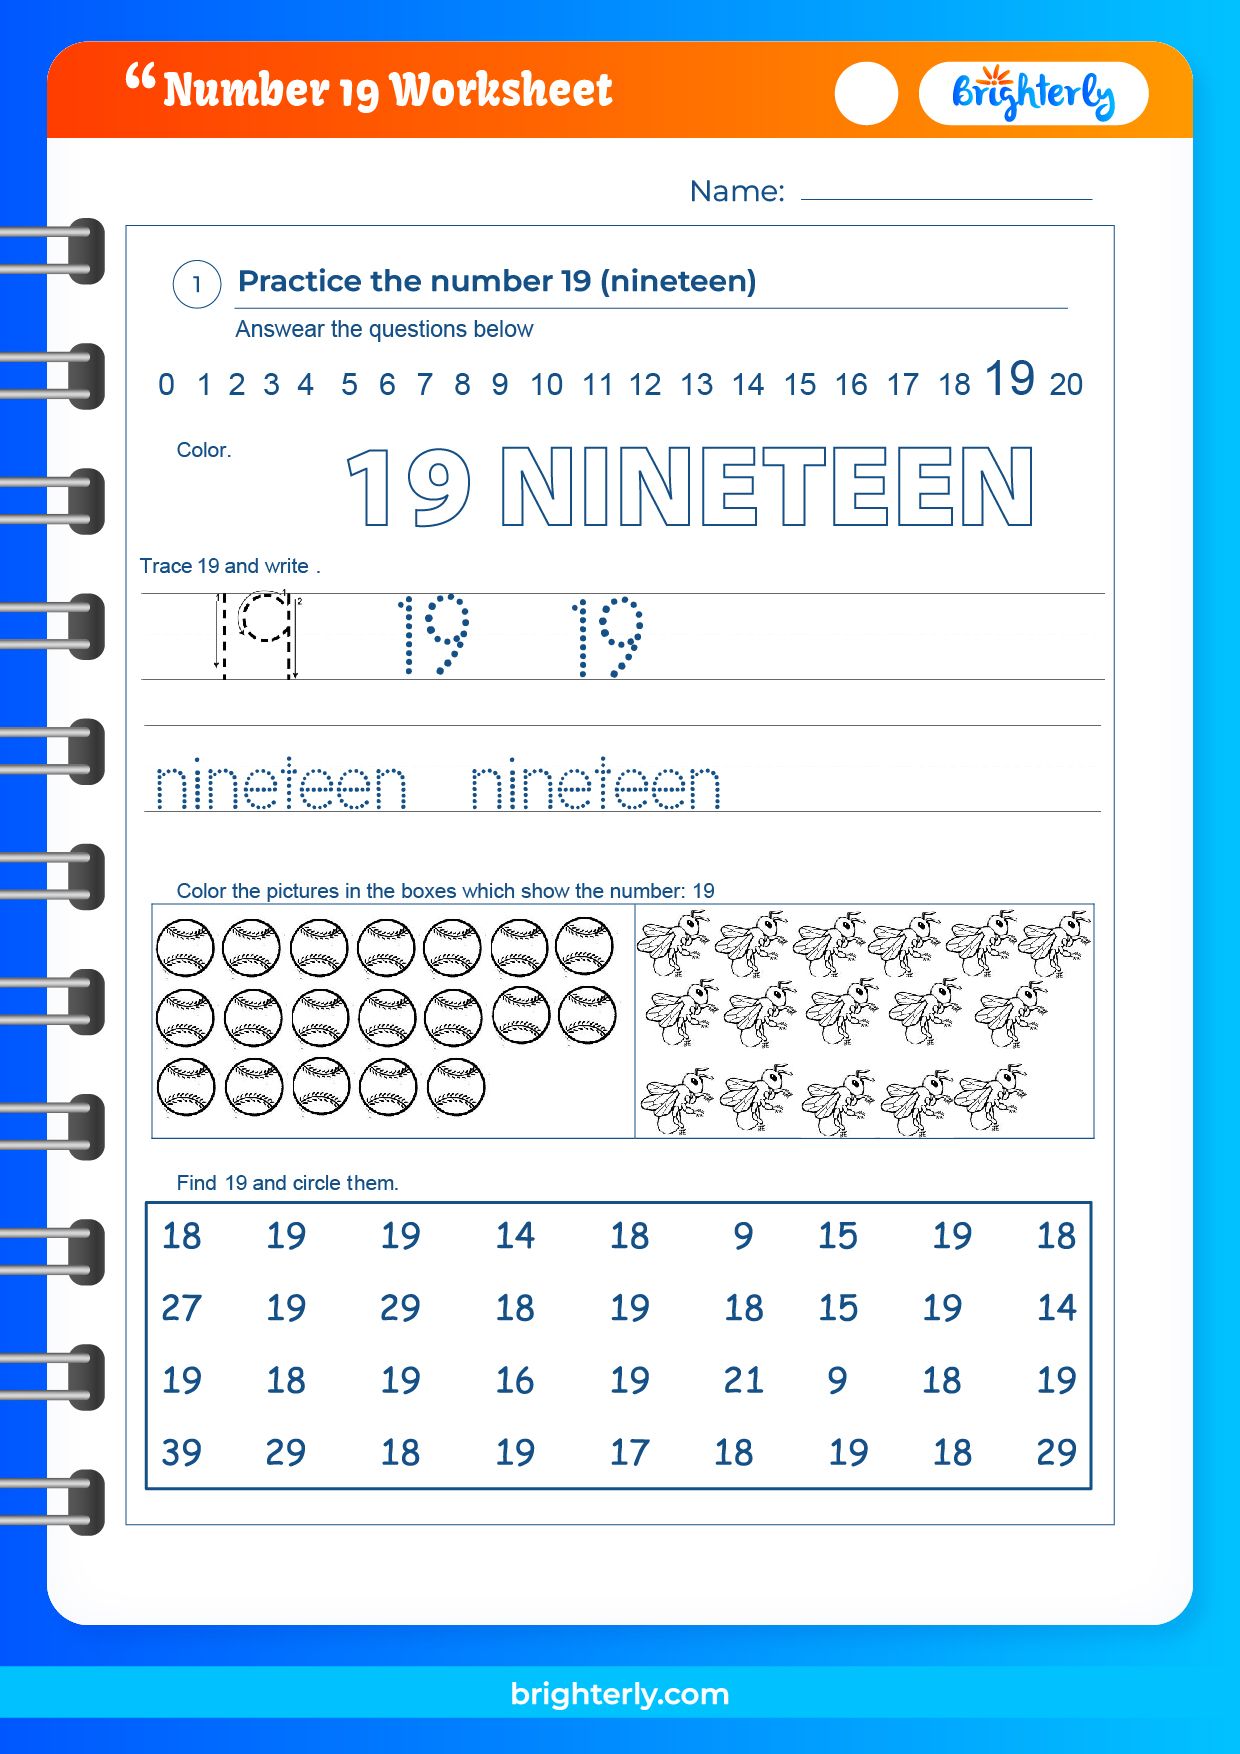 Free Printable Number 19 (Nineteen) Worksheets for Kids PDFs